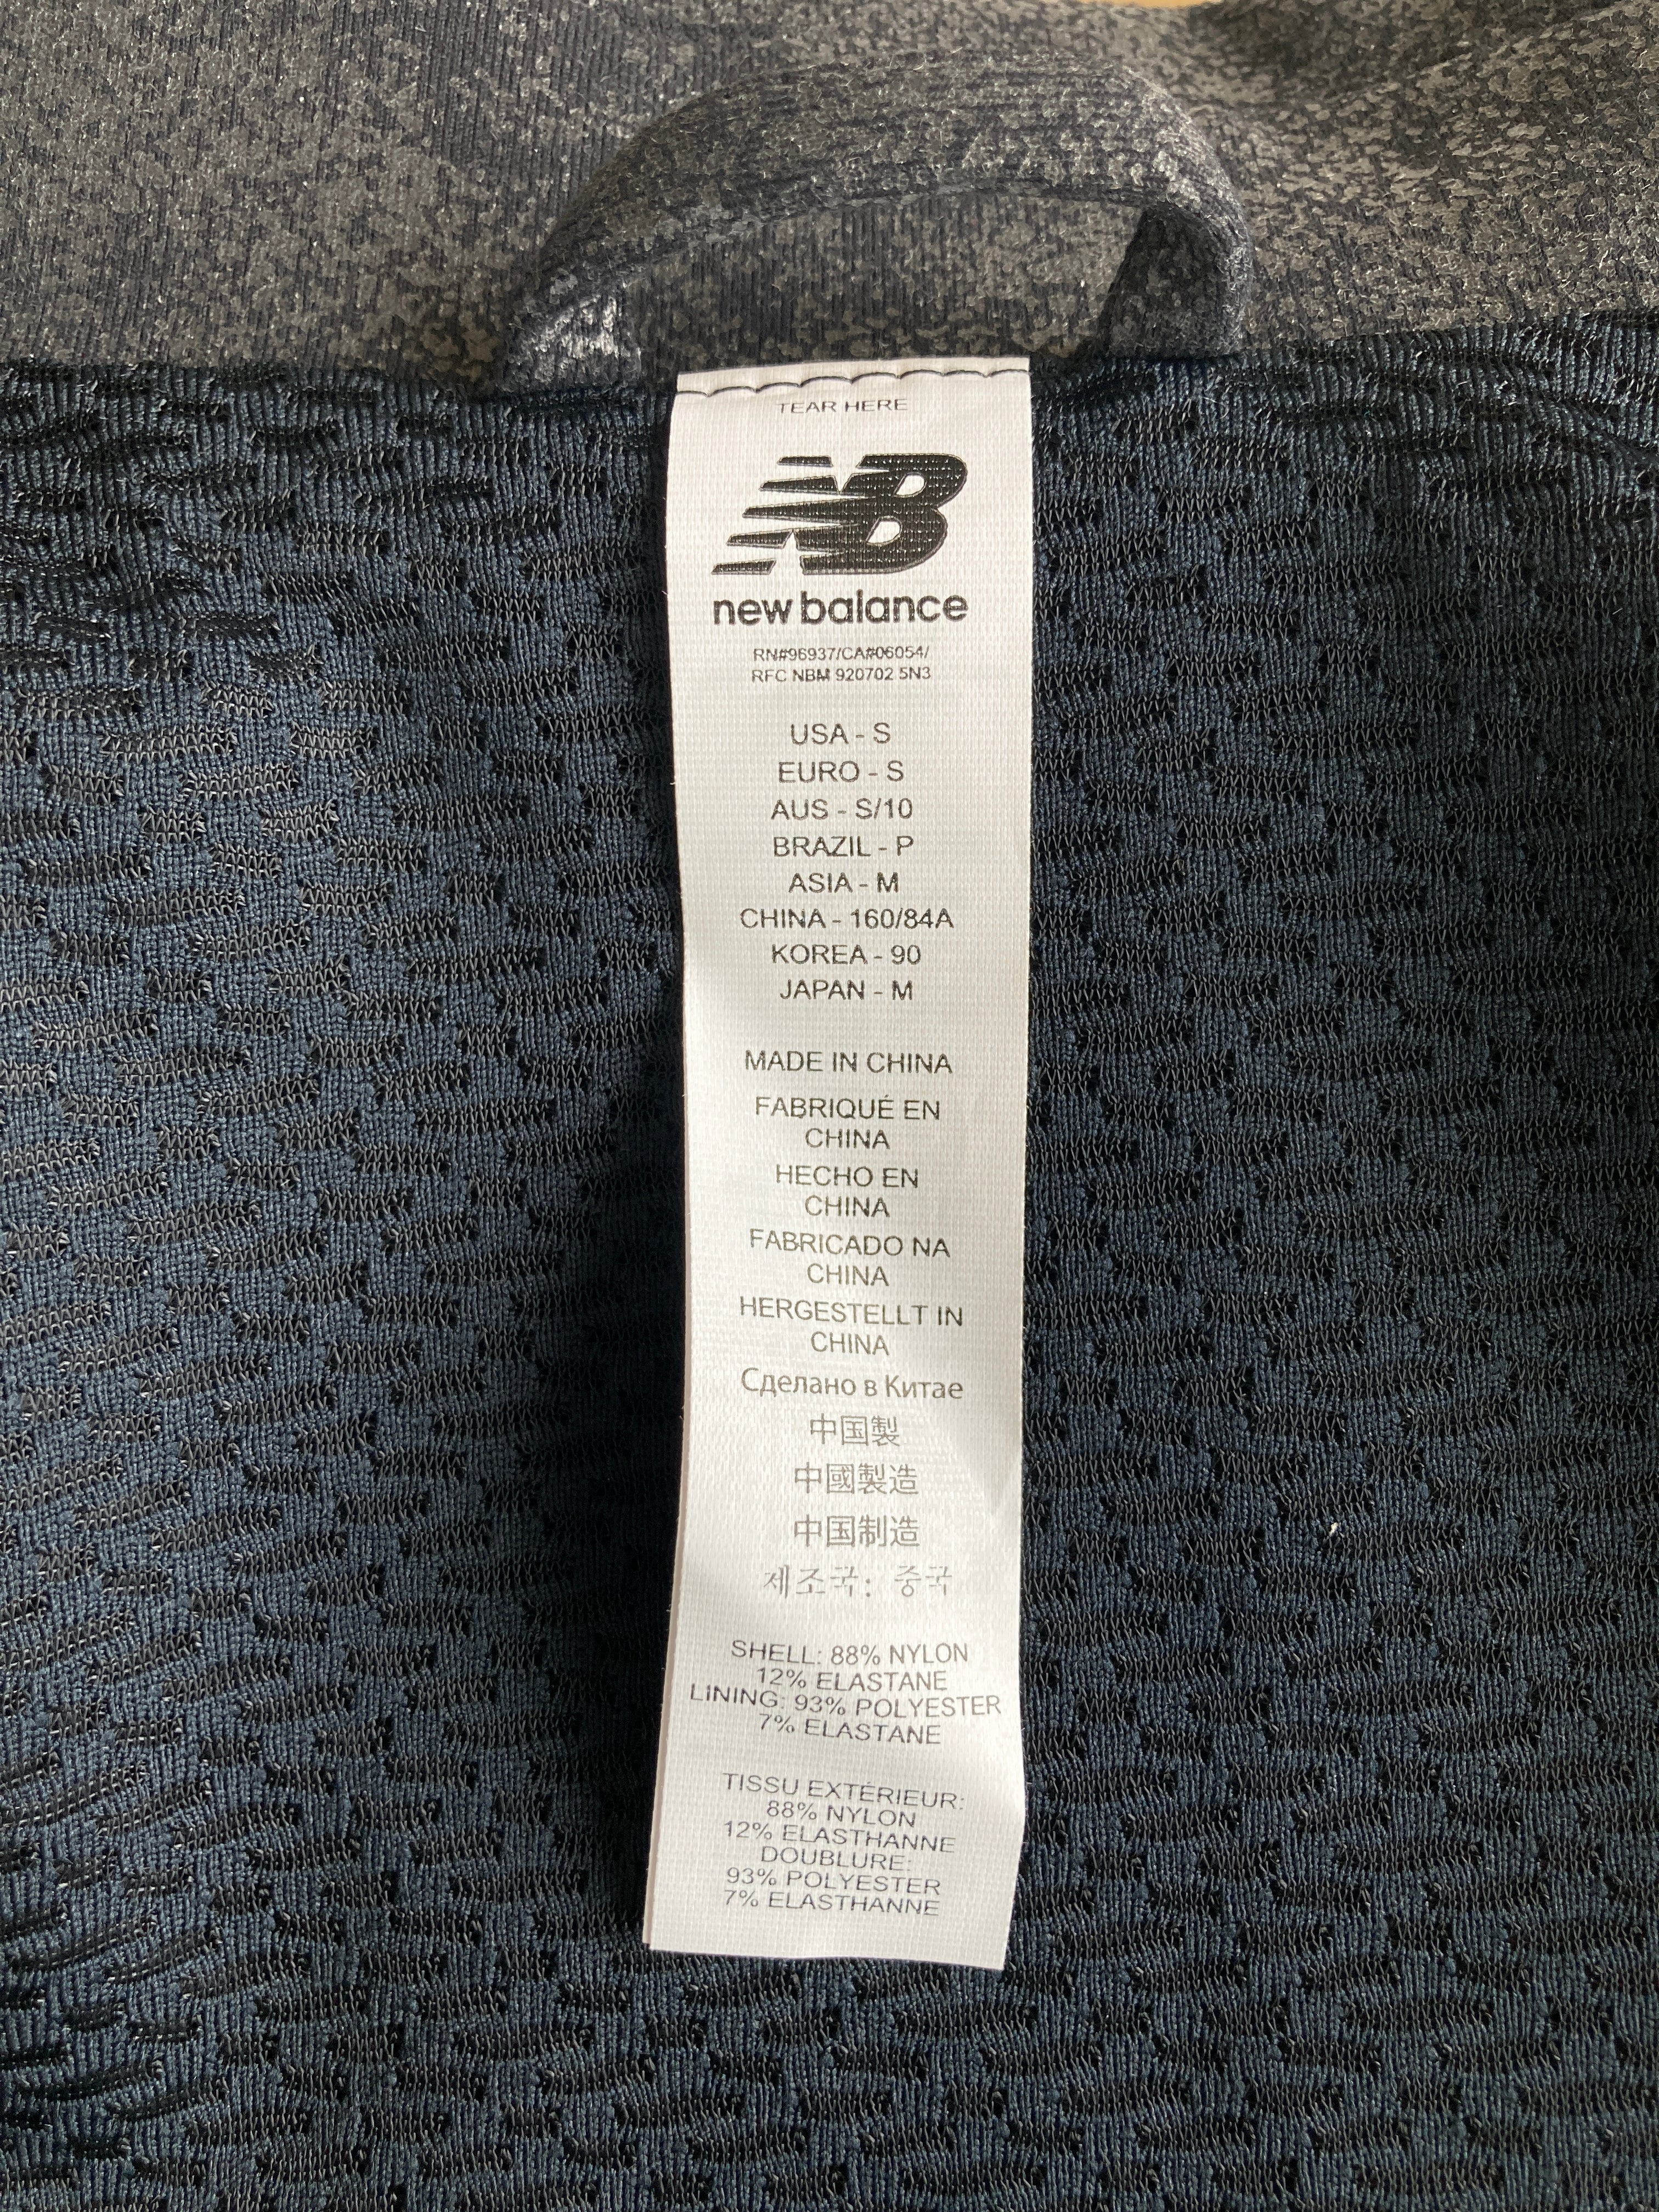 New Balance Black Shimmer Moto Jacket, S